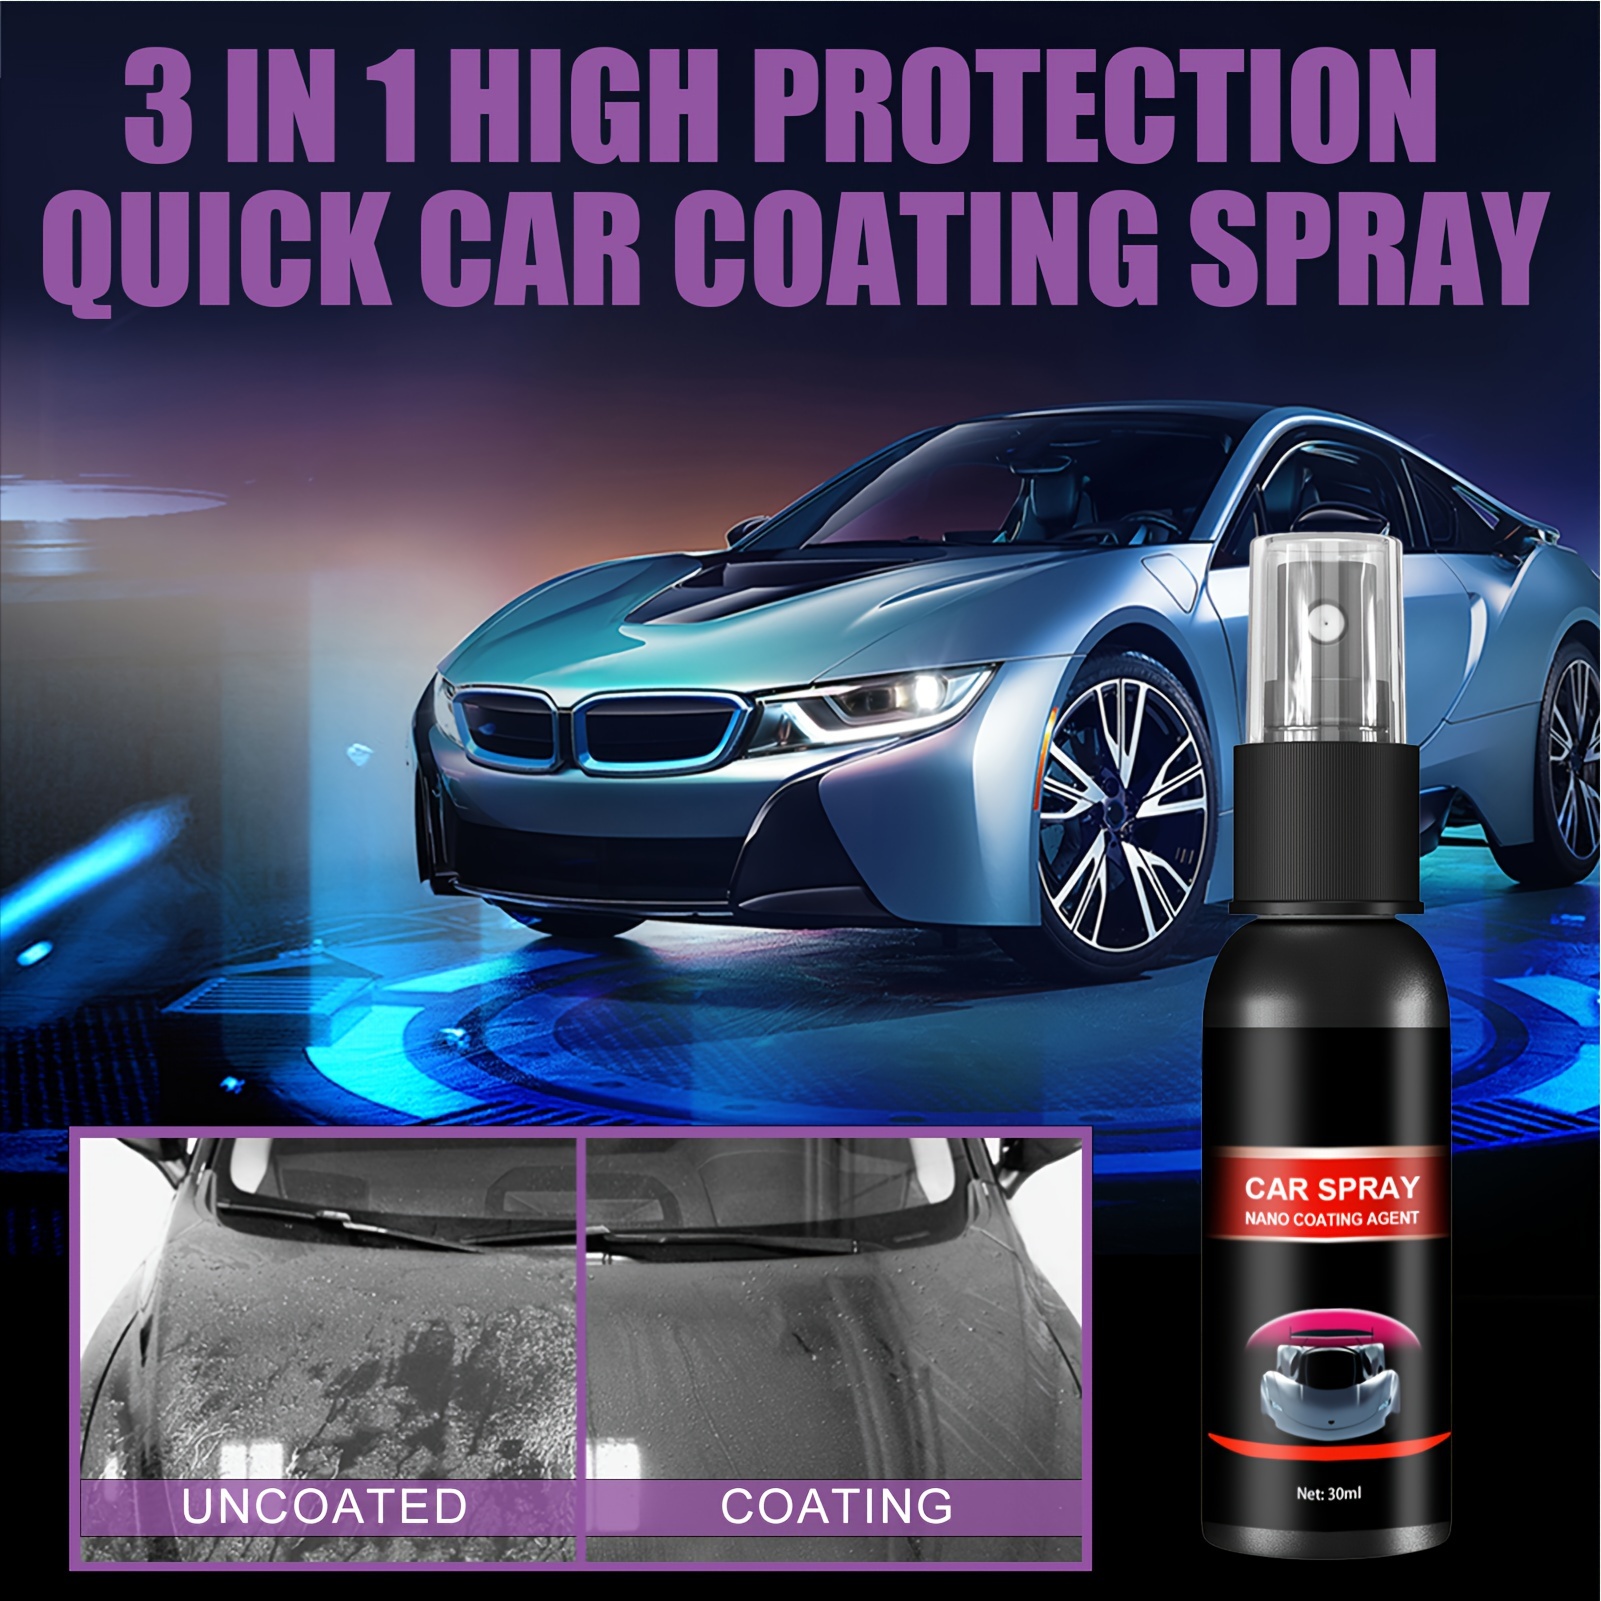 Car Scratch Repair Nano Spray, 30ml Car Nano Scratch Removal Spray, Fast Repair  Scratches Nano Car Scratch Repairing Polish Spray for All Car Body (Spray +  Cloth + Sponge) 